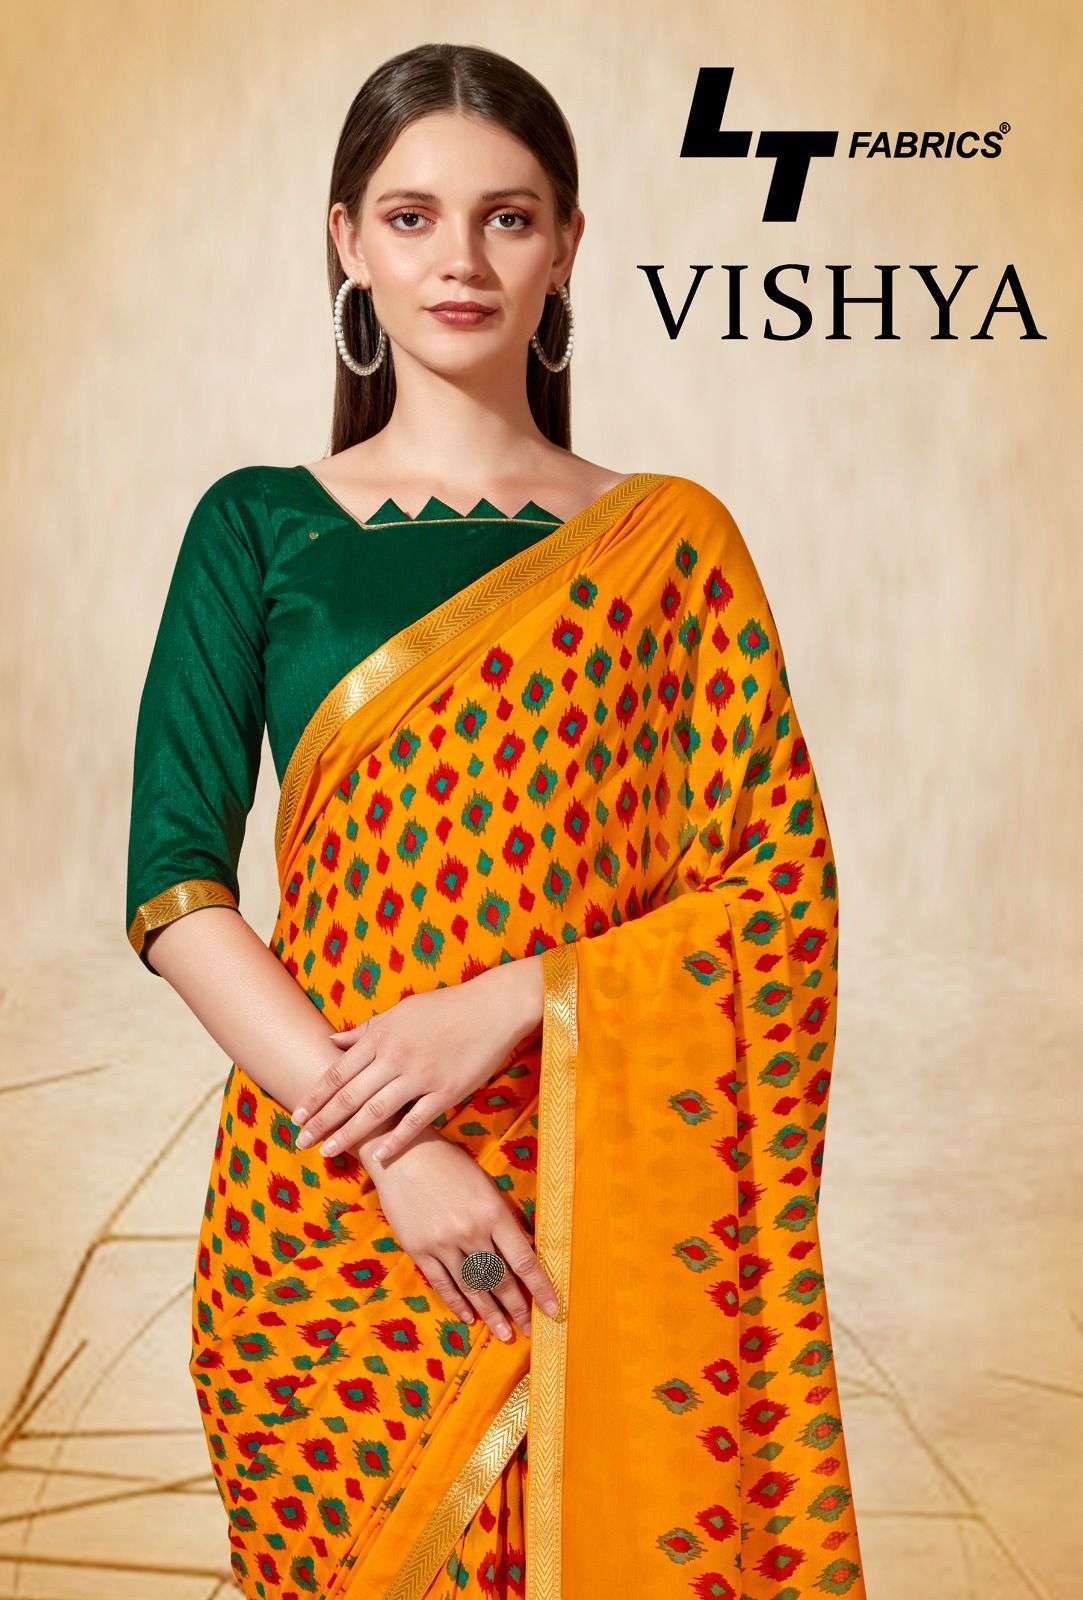 lt fabrics vishya series 51001-51010 micro printed saree